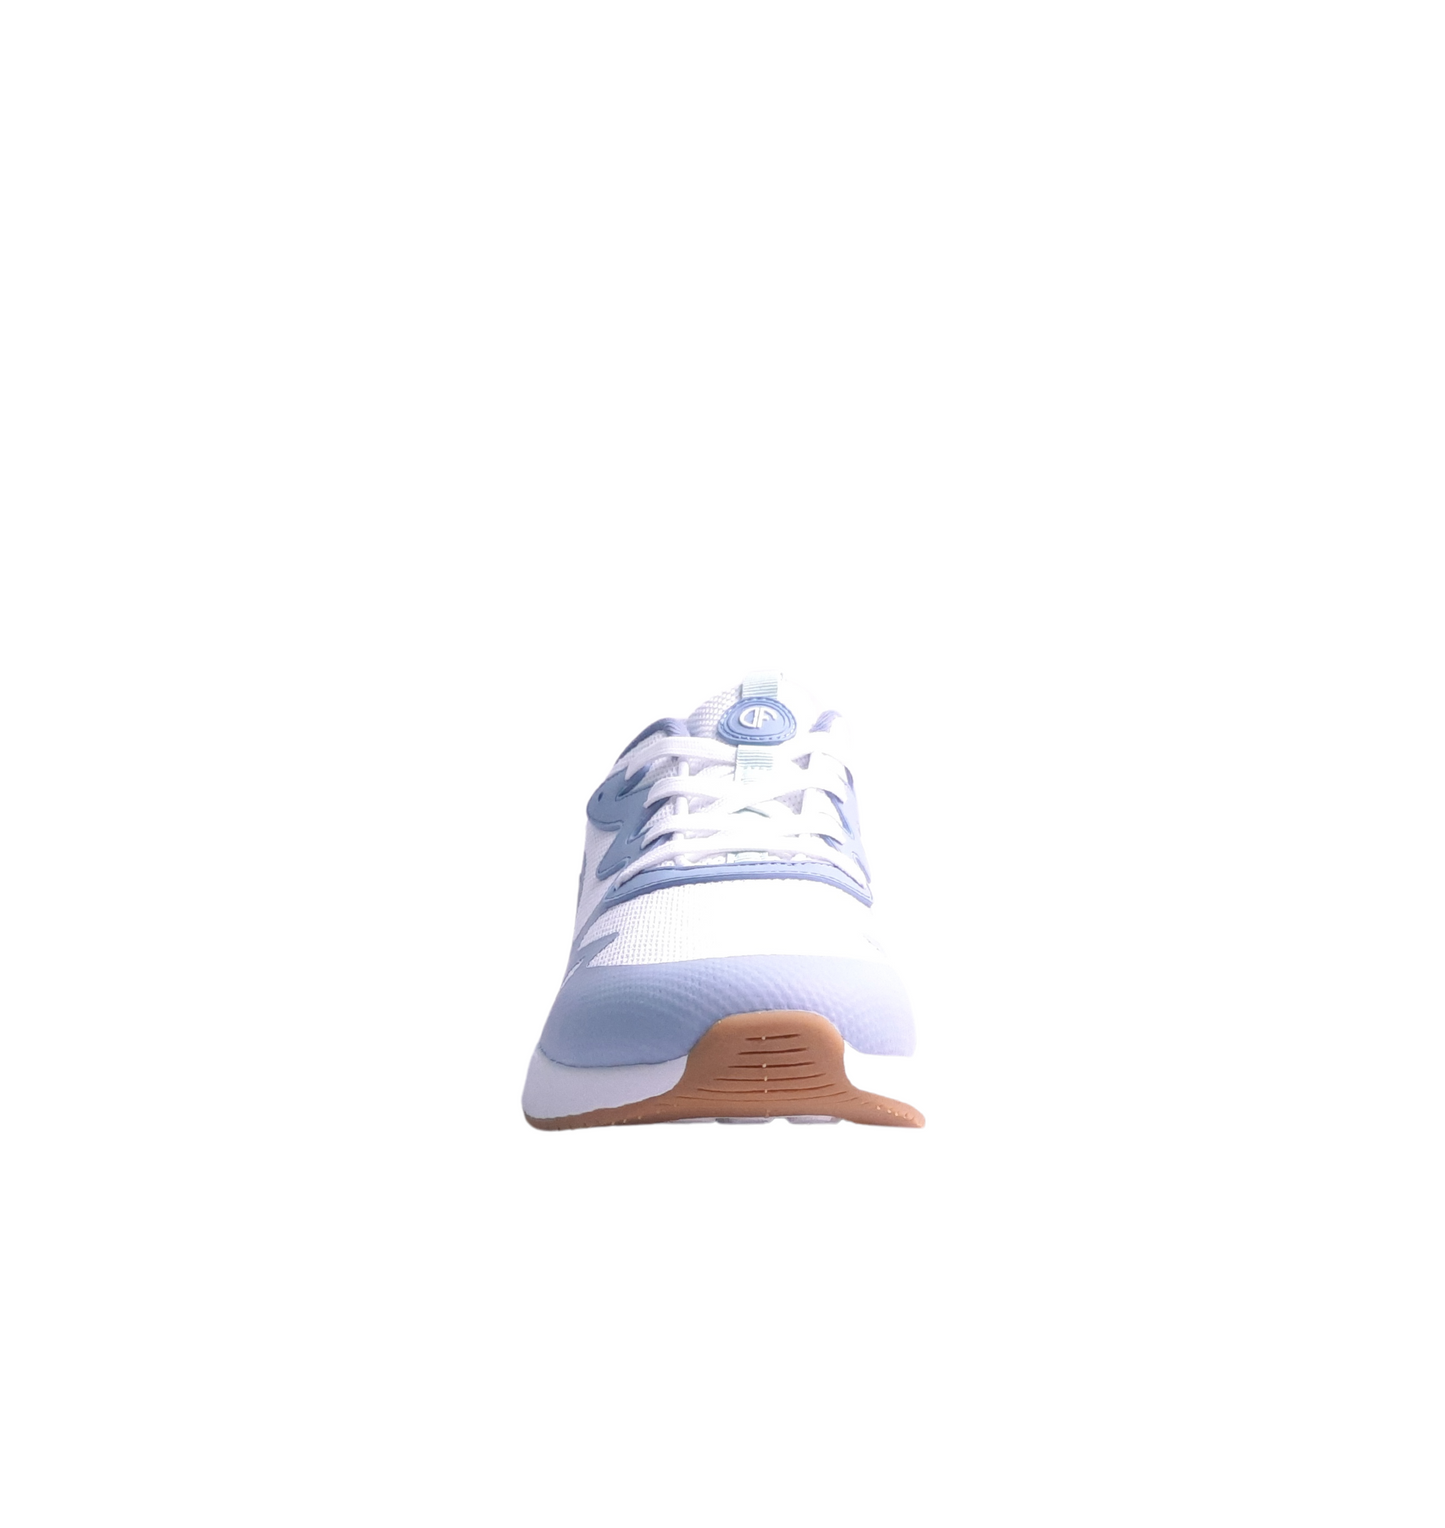 Prato White Sport Shoes